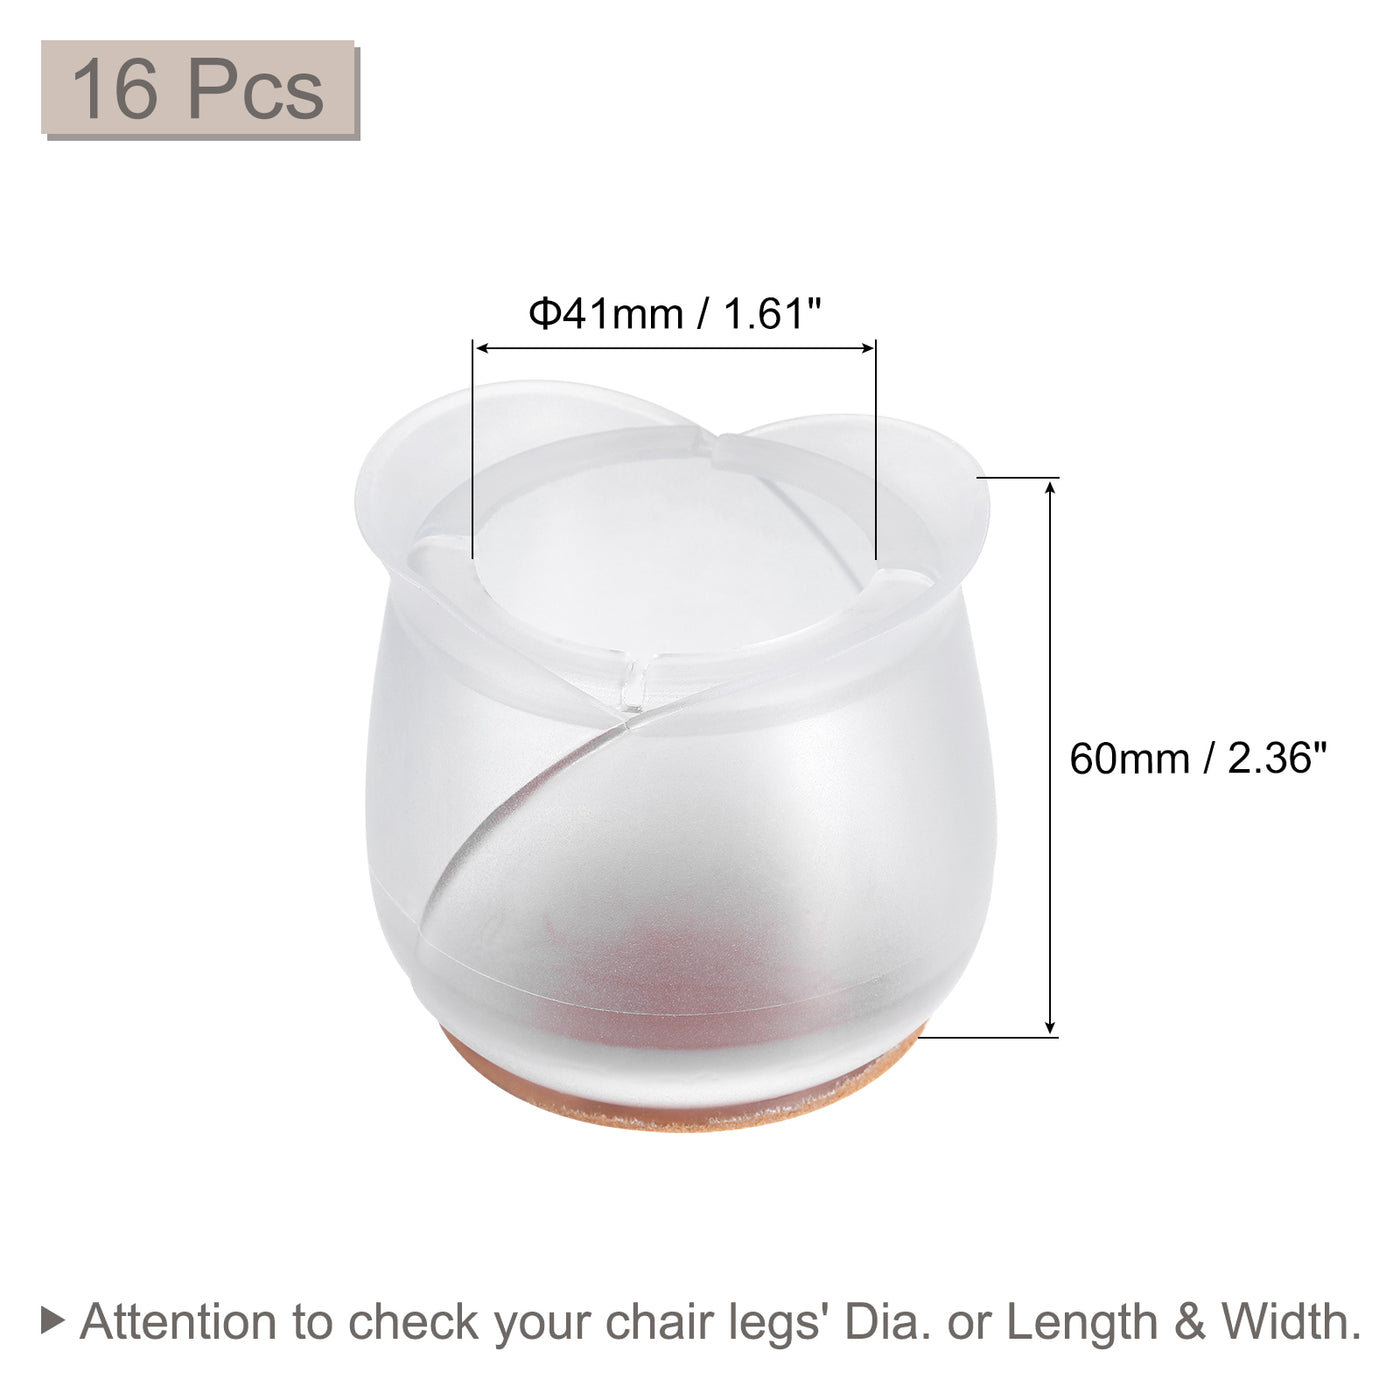 uxcell Uxcell Chair Leg Floor Protectors, 16Pcs 41mm(1.61") PVC & Felt Chair Leg Cover Caps for Hardwood Floors (Clear White)